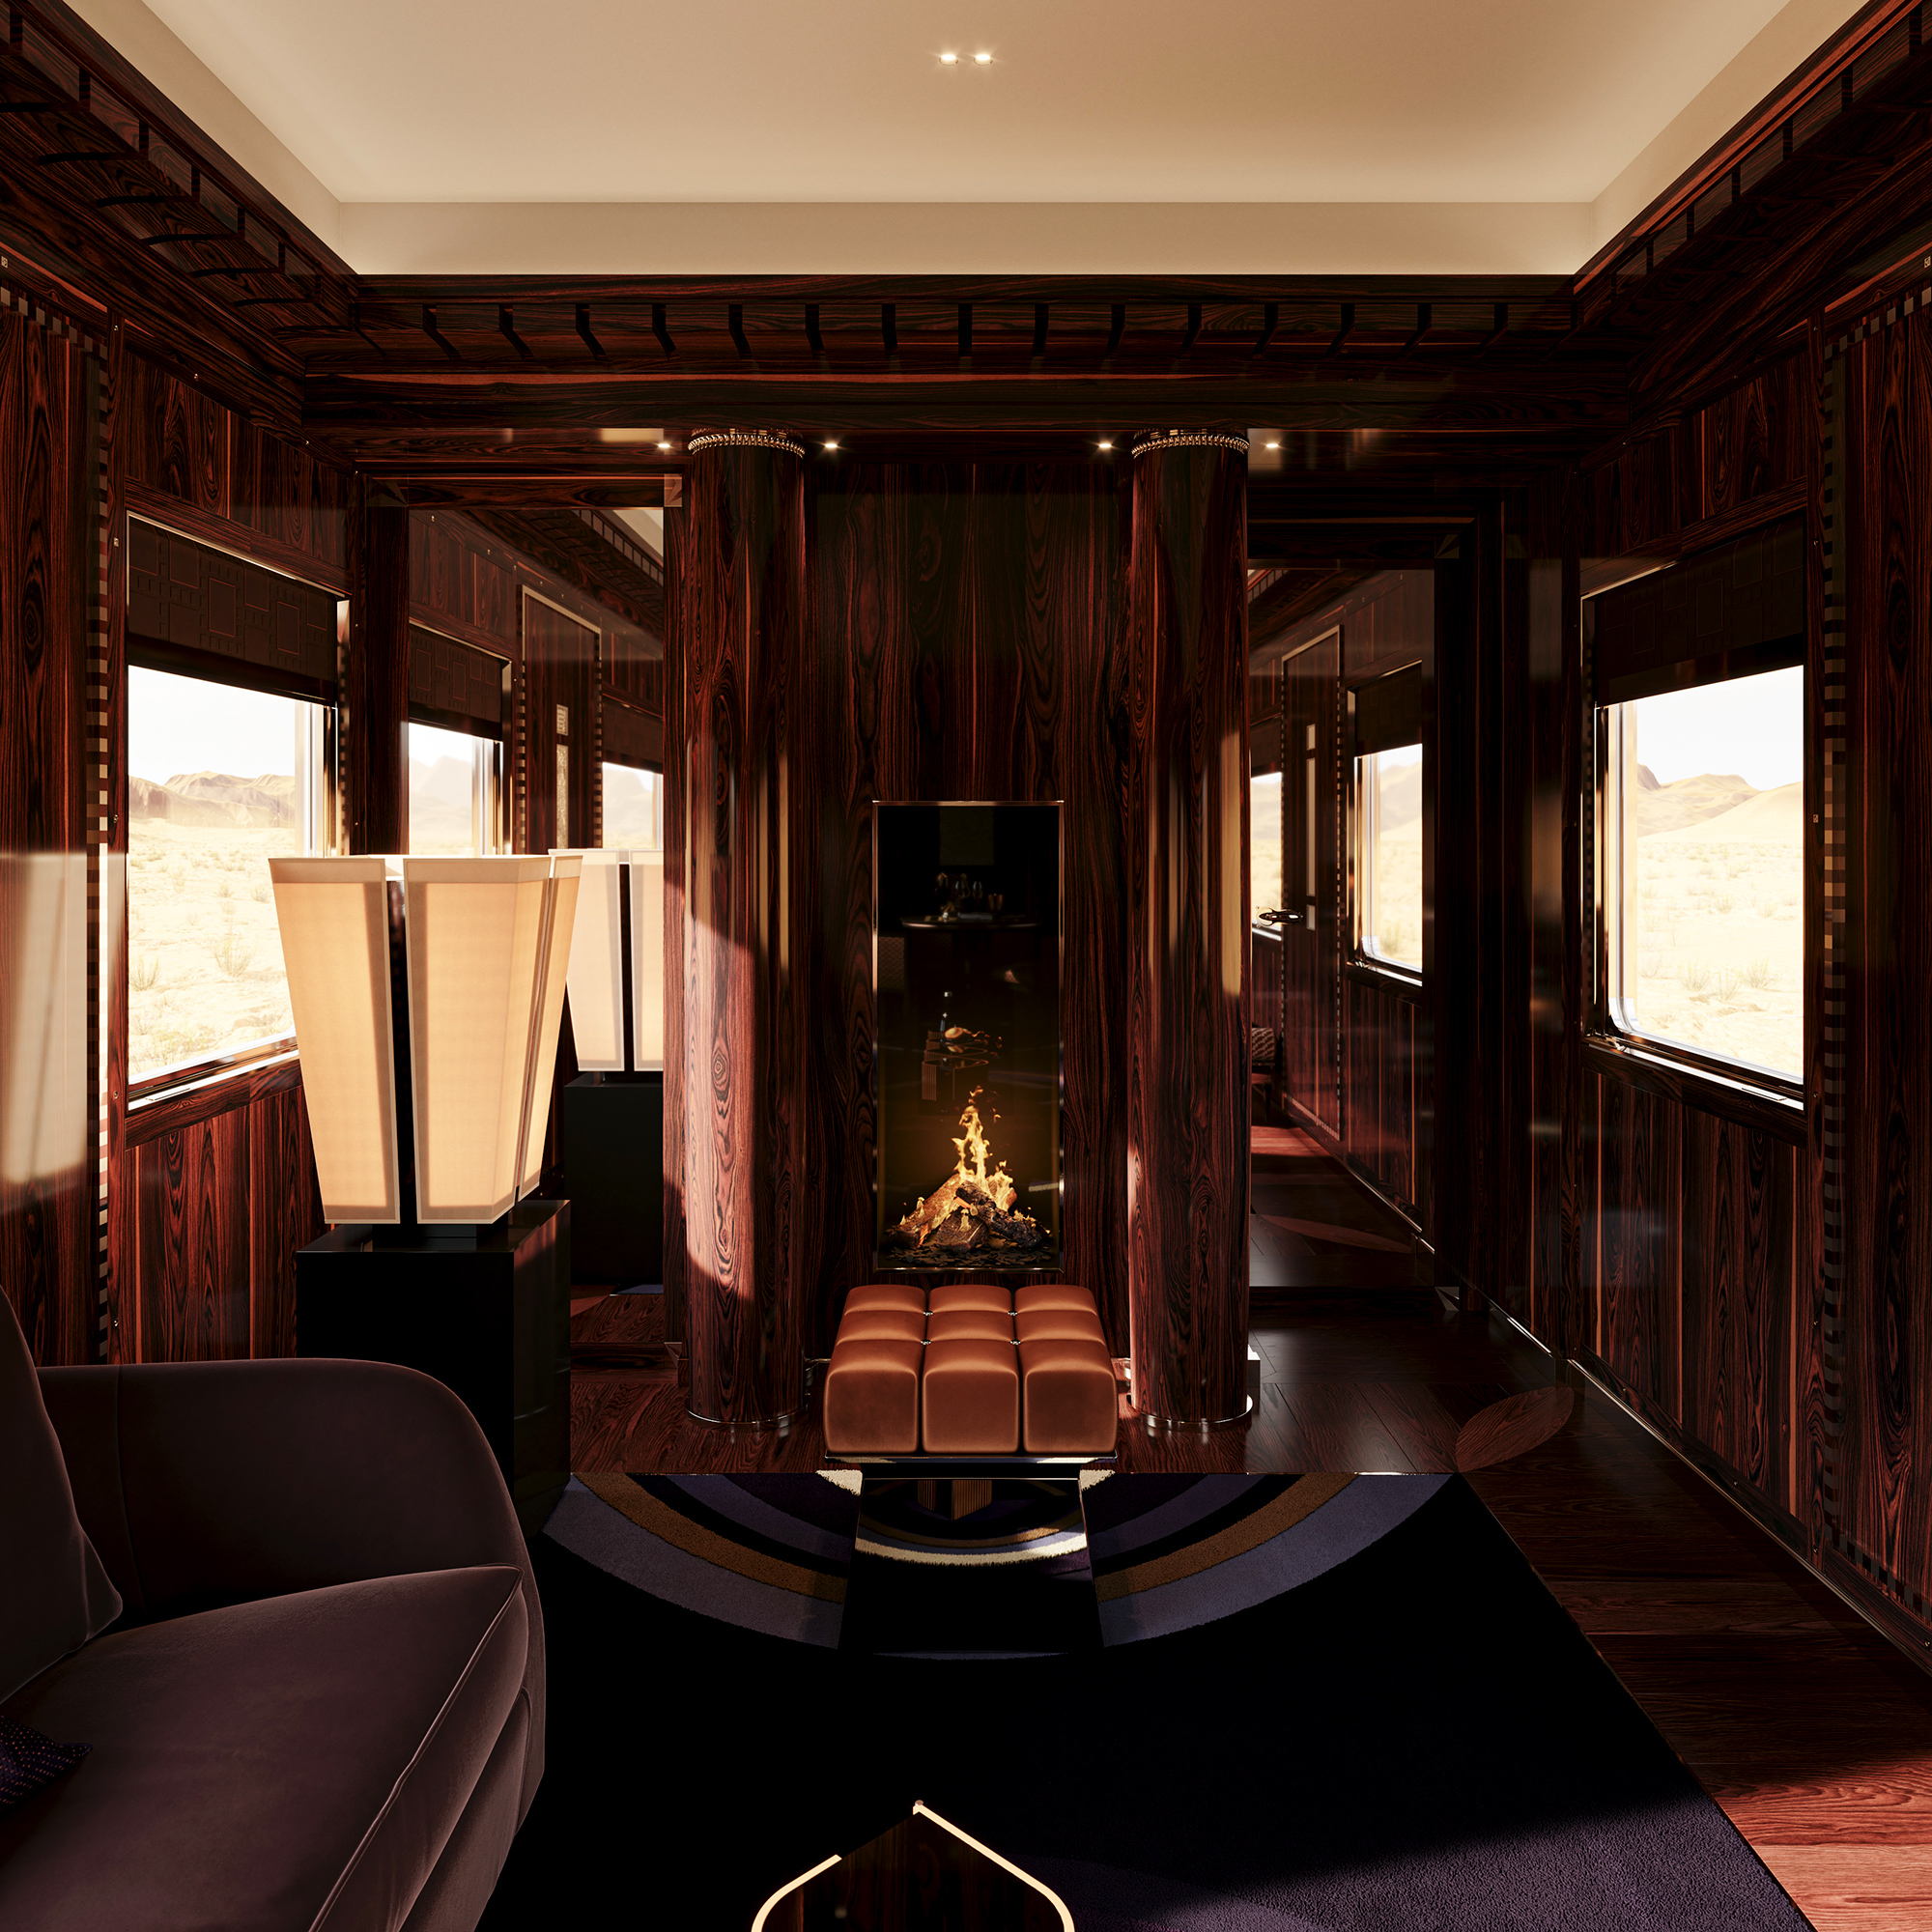 Orient Express, Artisan of Travel since 1883